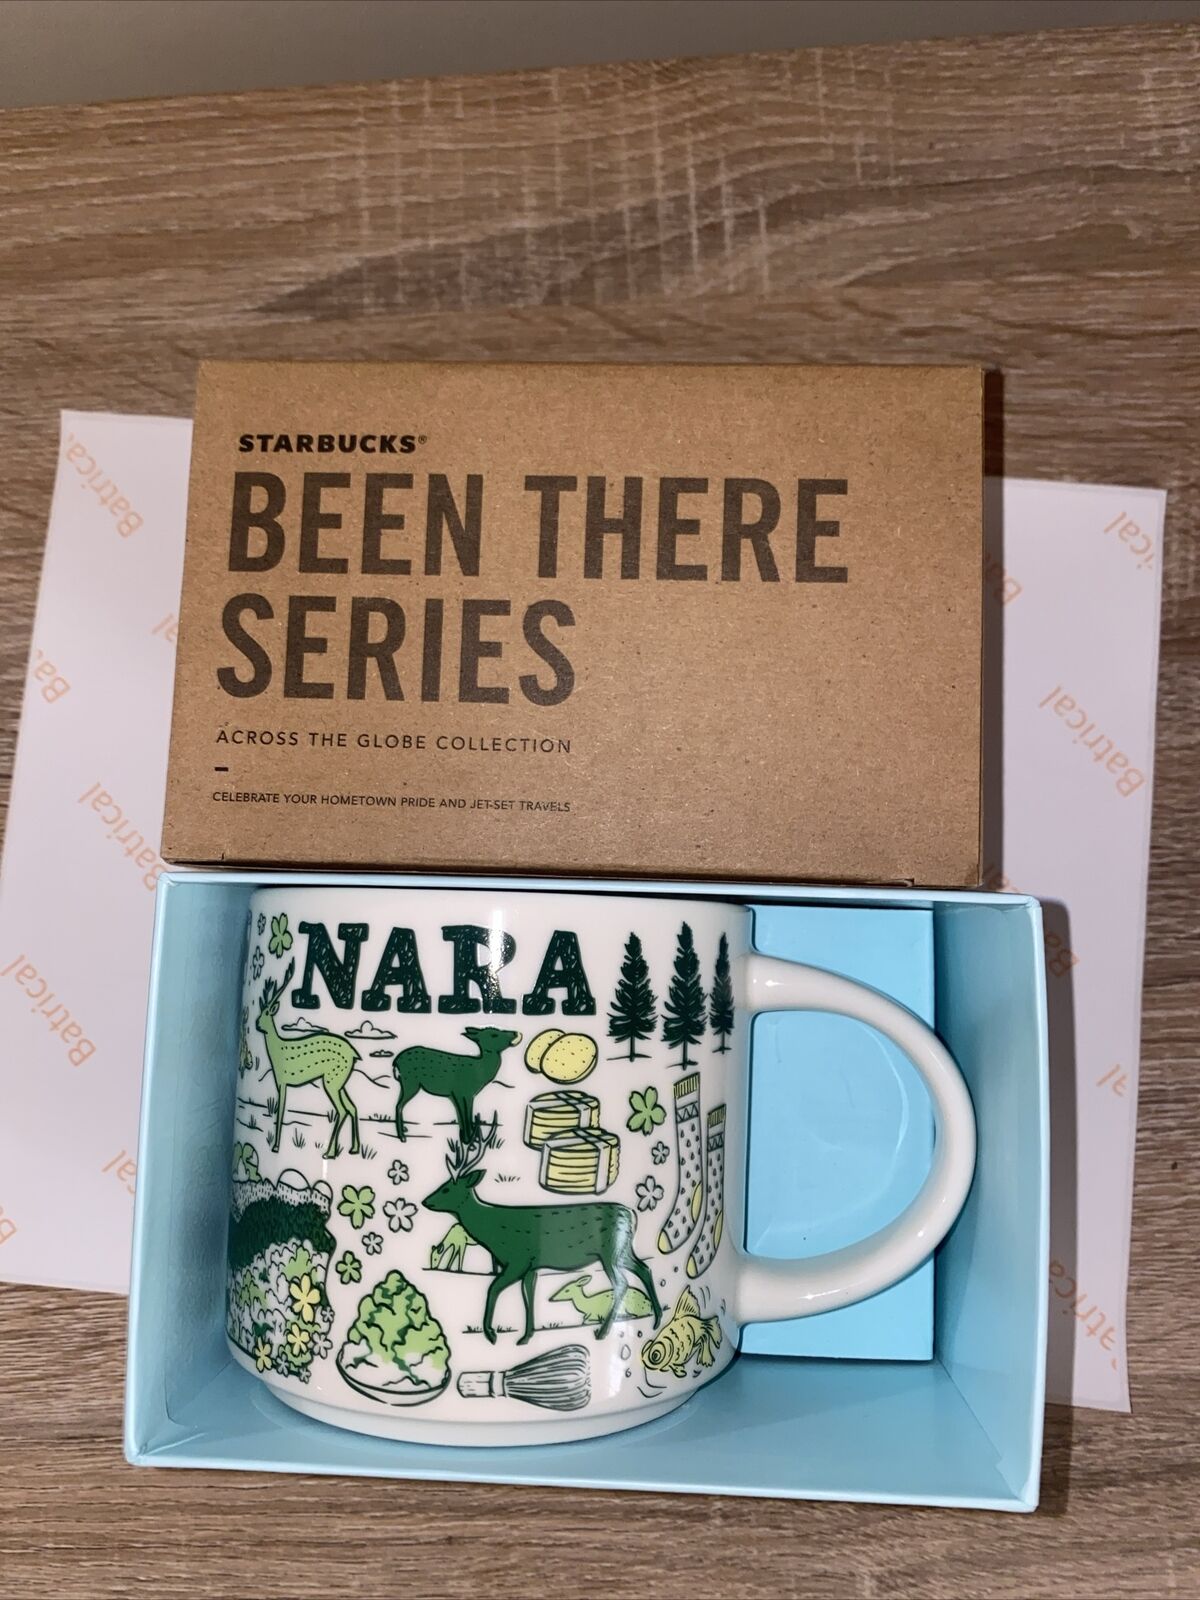 Japan NARA Starbucks Mug 14oz Been There Series NEW With Box - Shipping From USA